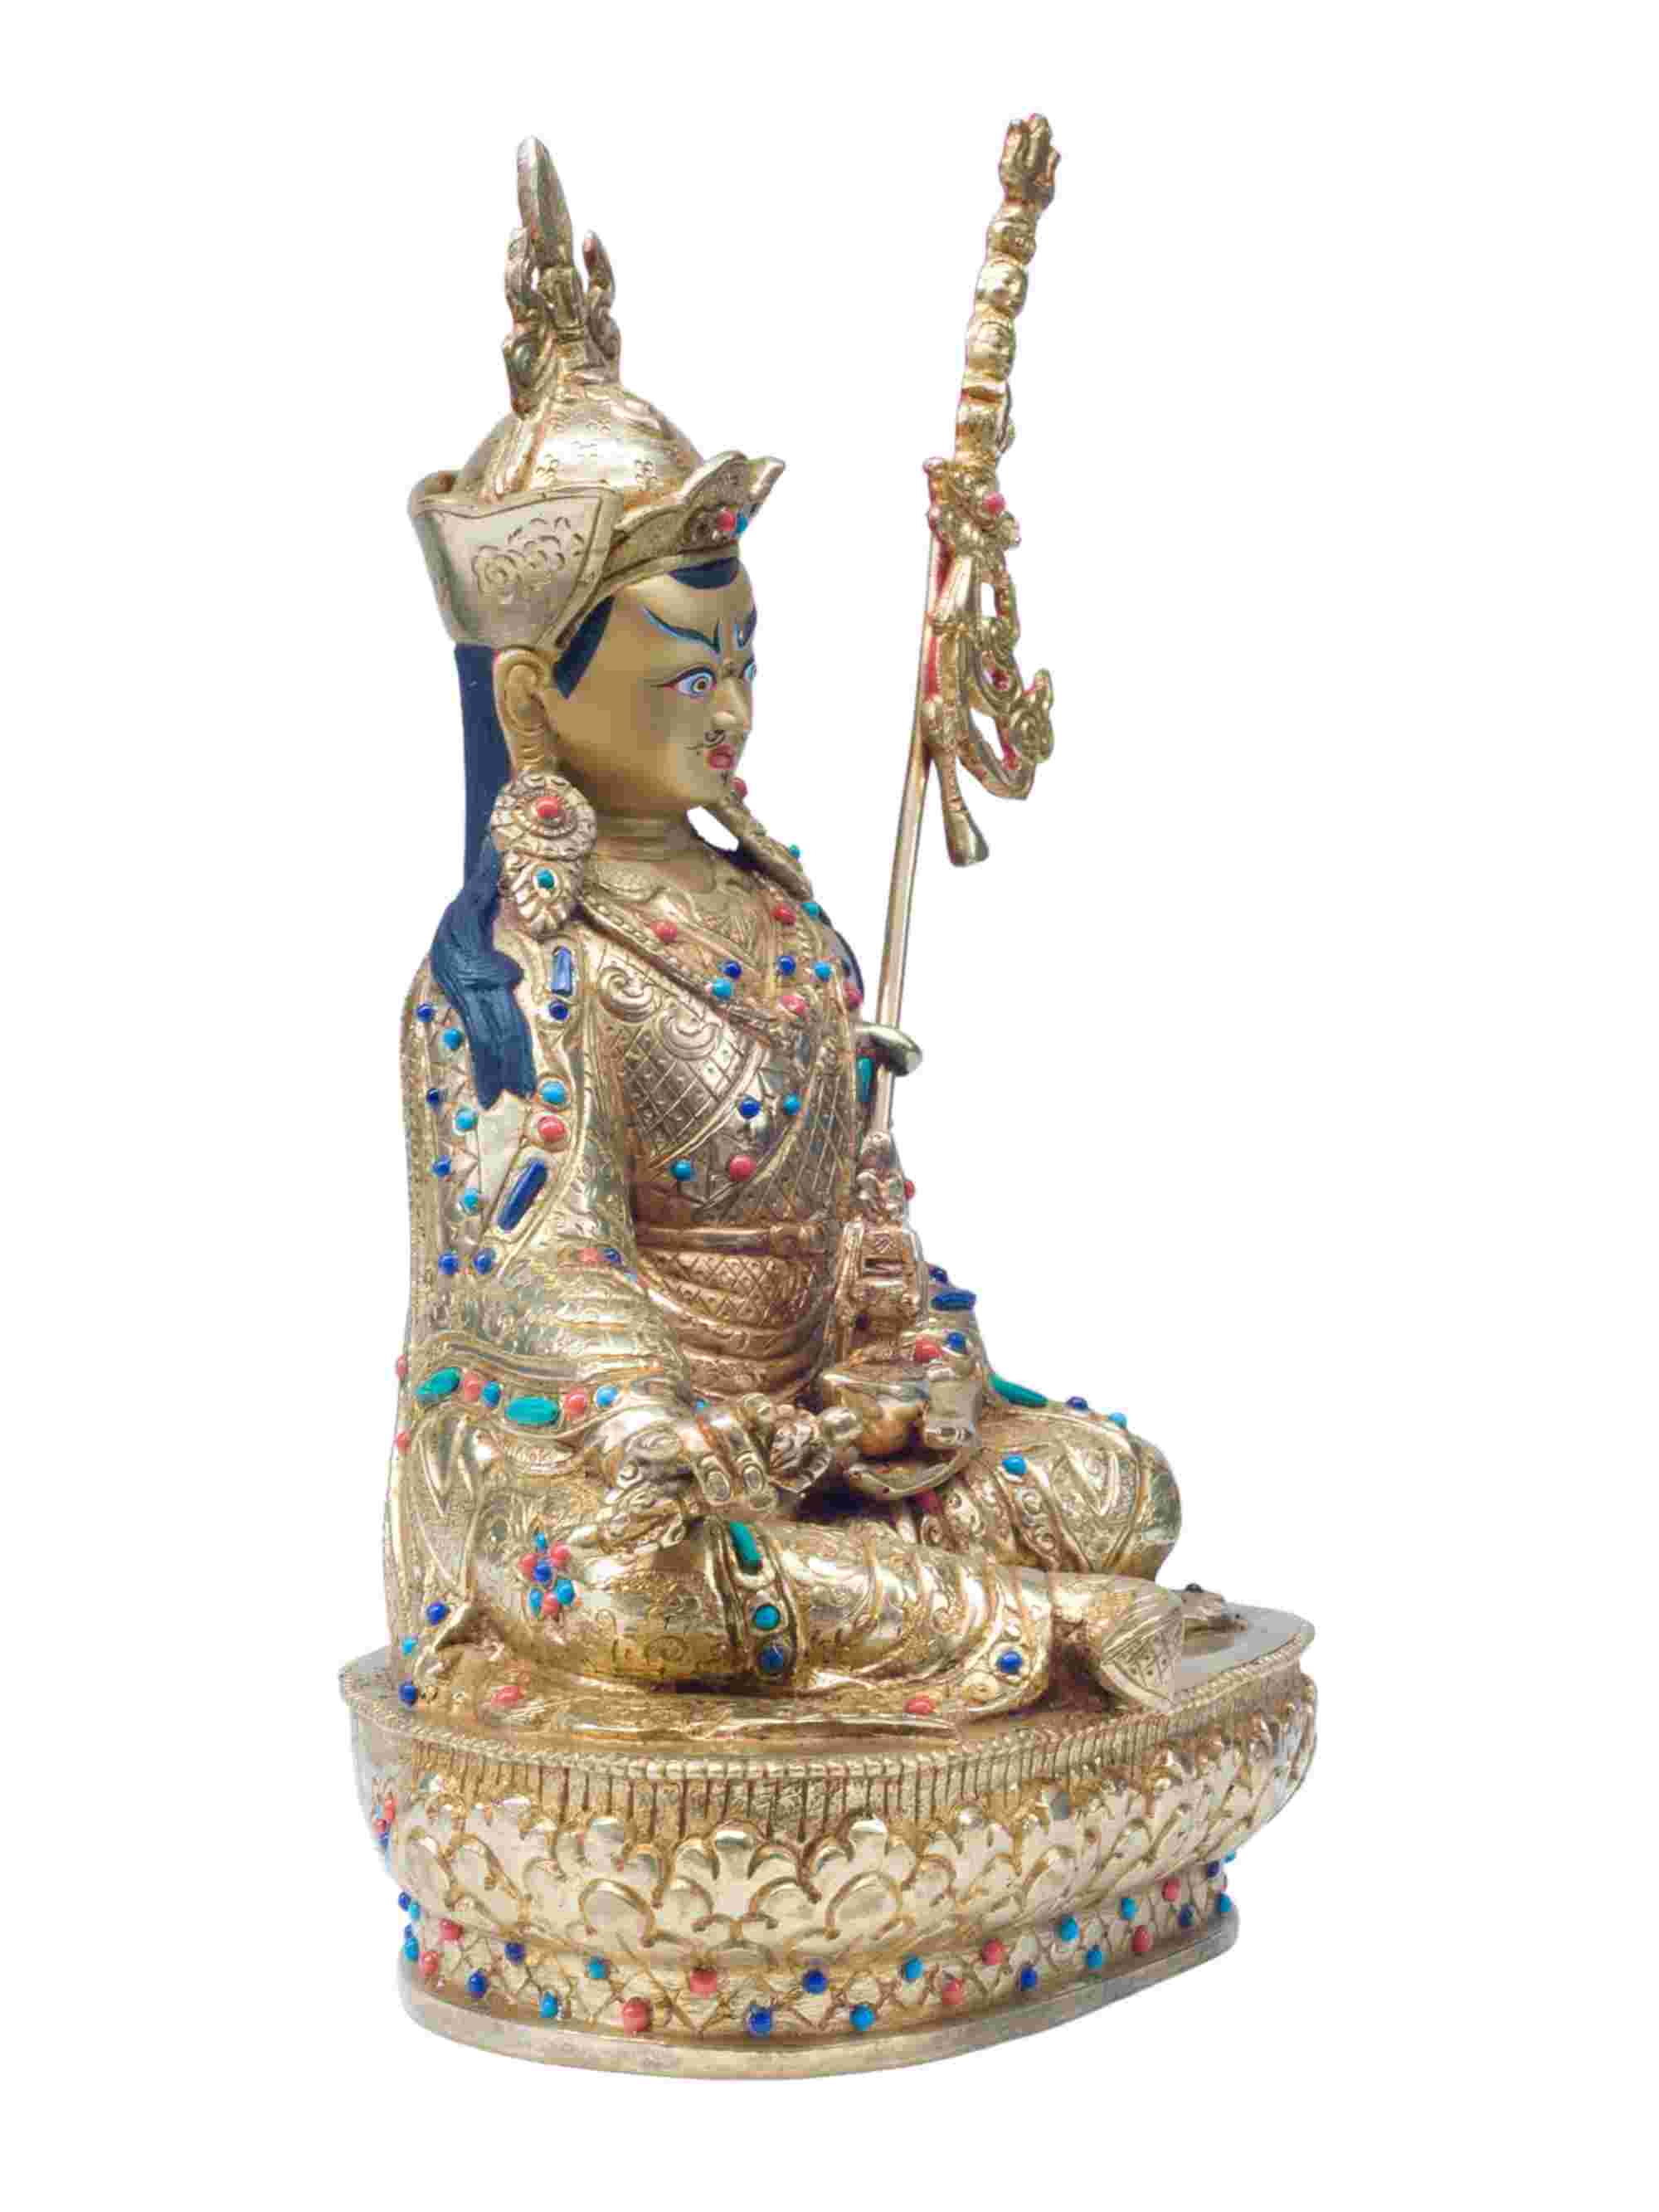 Buddhist Handmade Statue Of Padmasambhava guru Rinpoche, full Fire Gold Plated, stone Setting With Painted Face